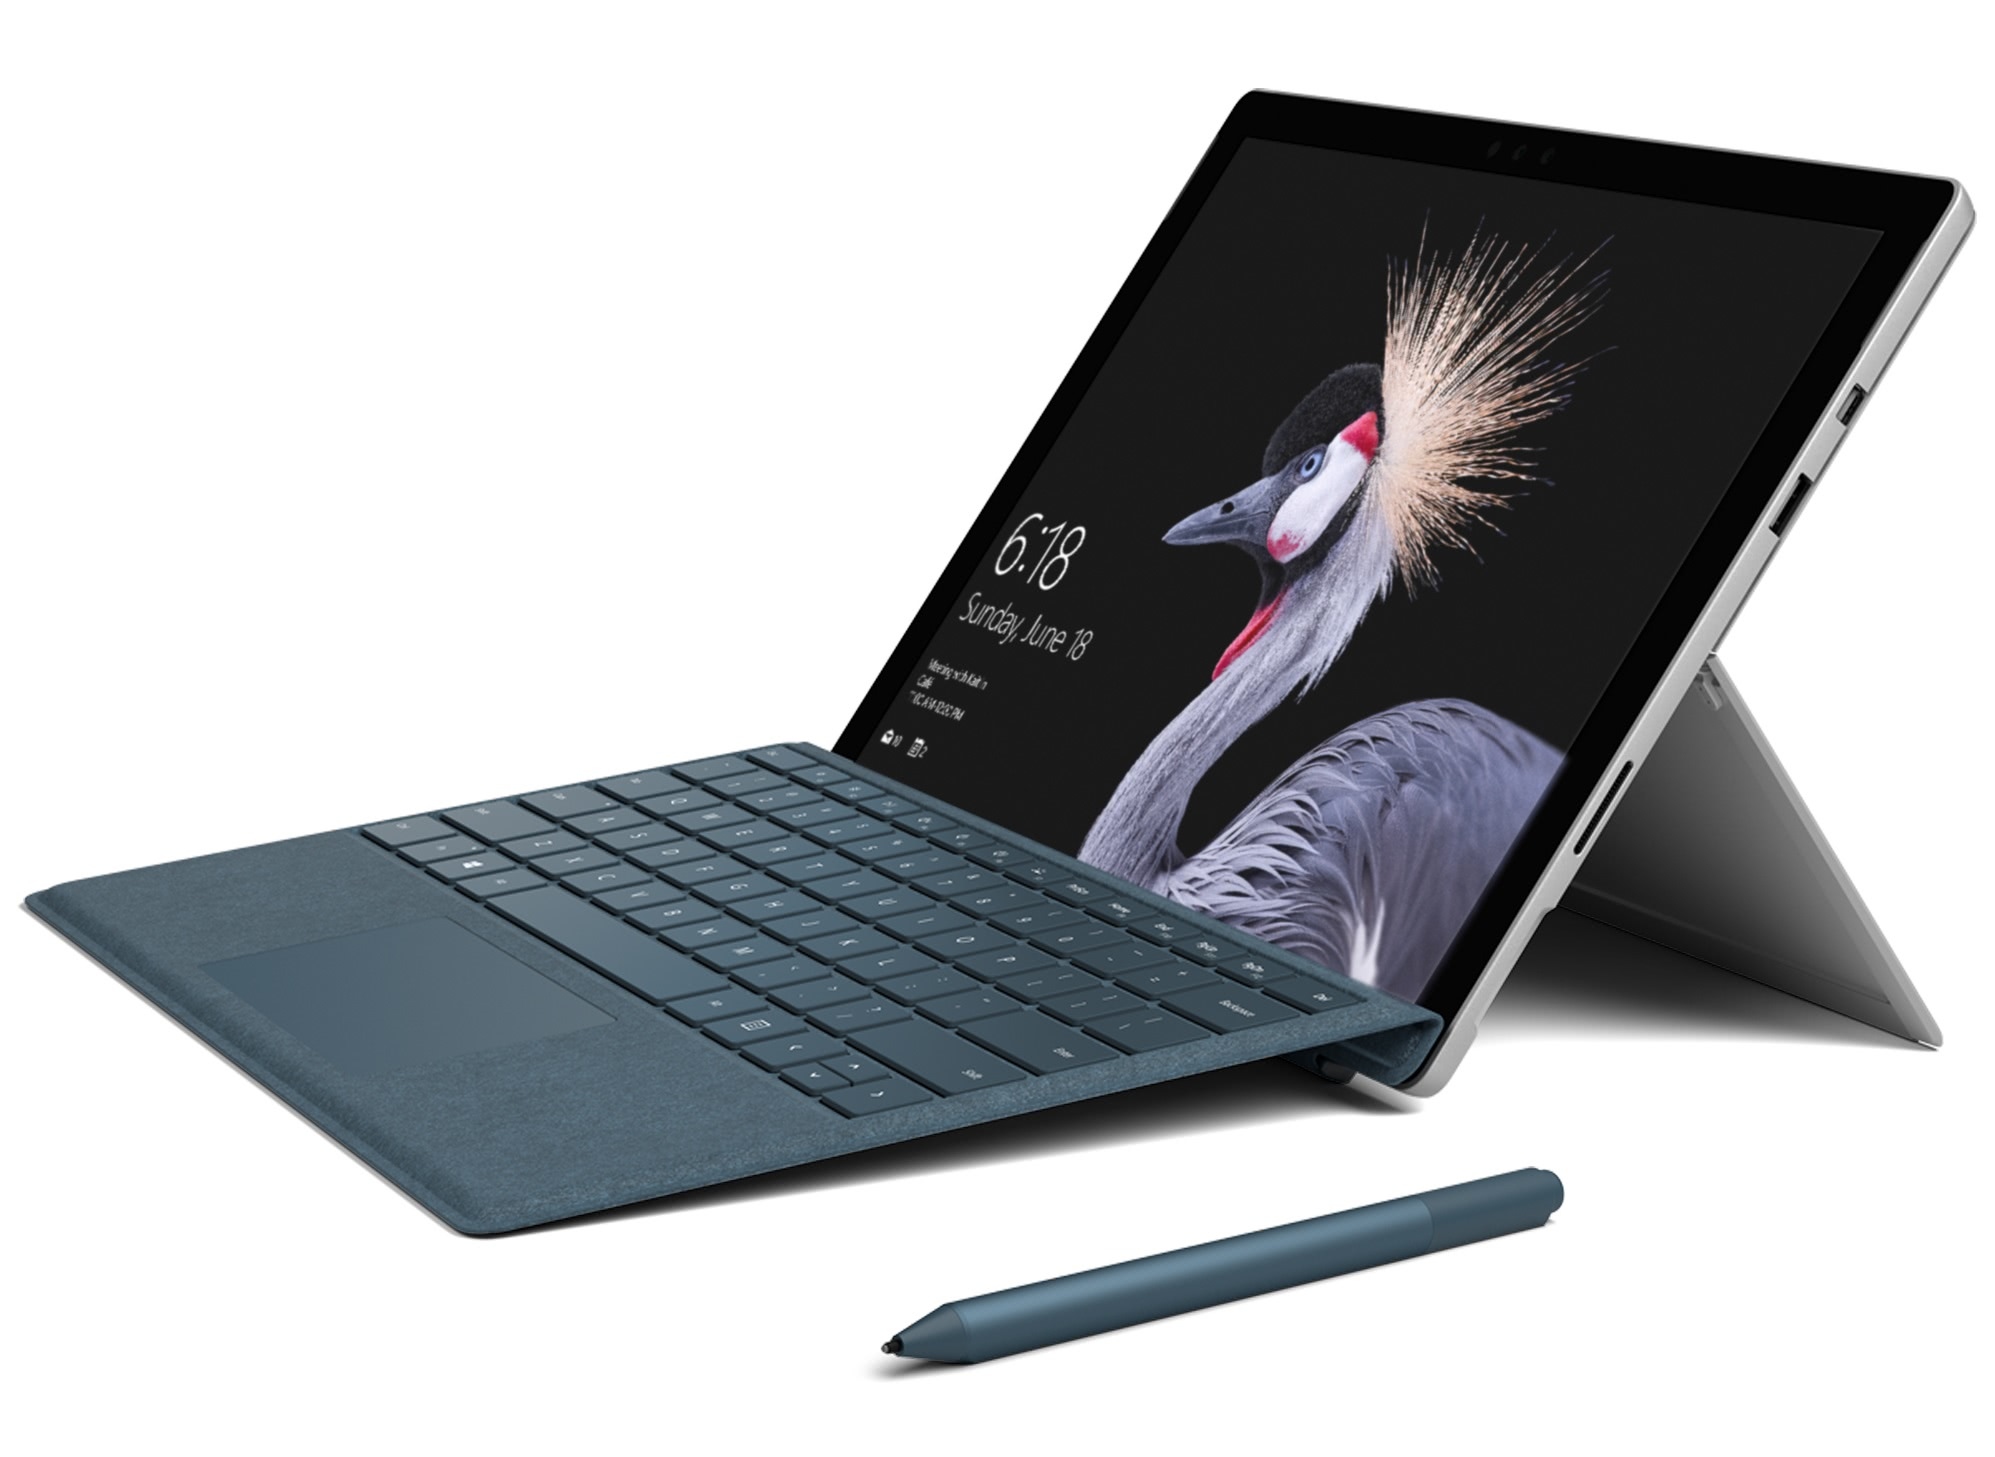 Microsoft Surface Book, Surface Pro 4 | Newegg.com